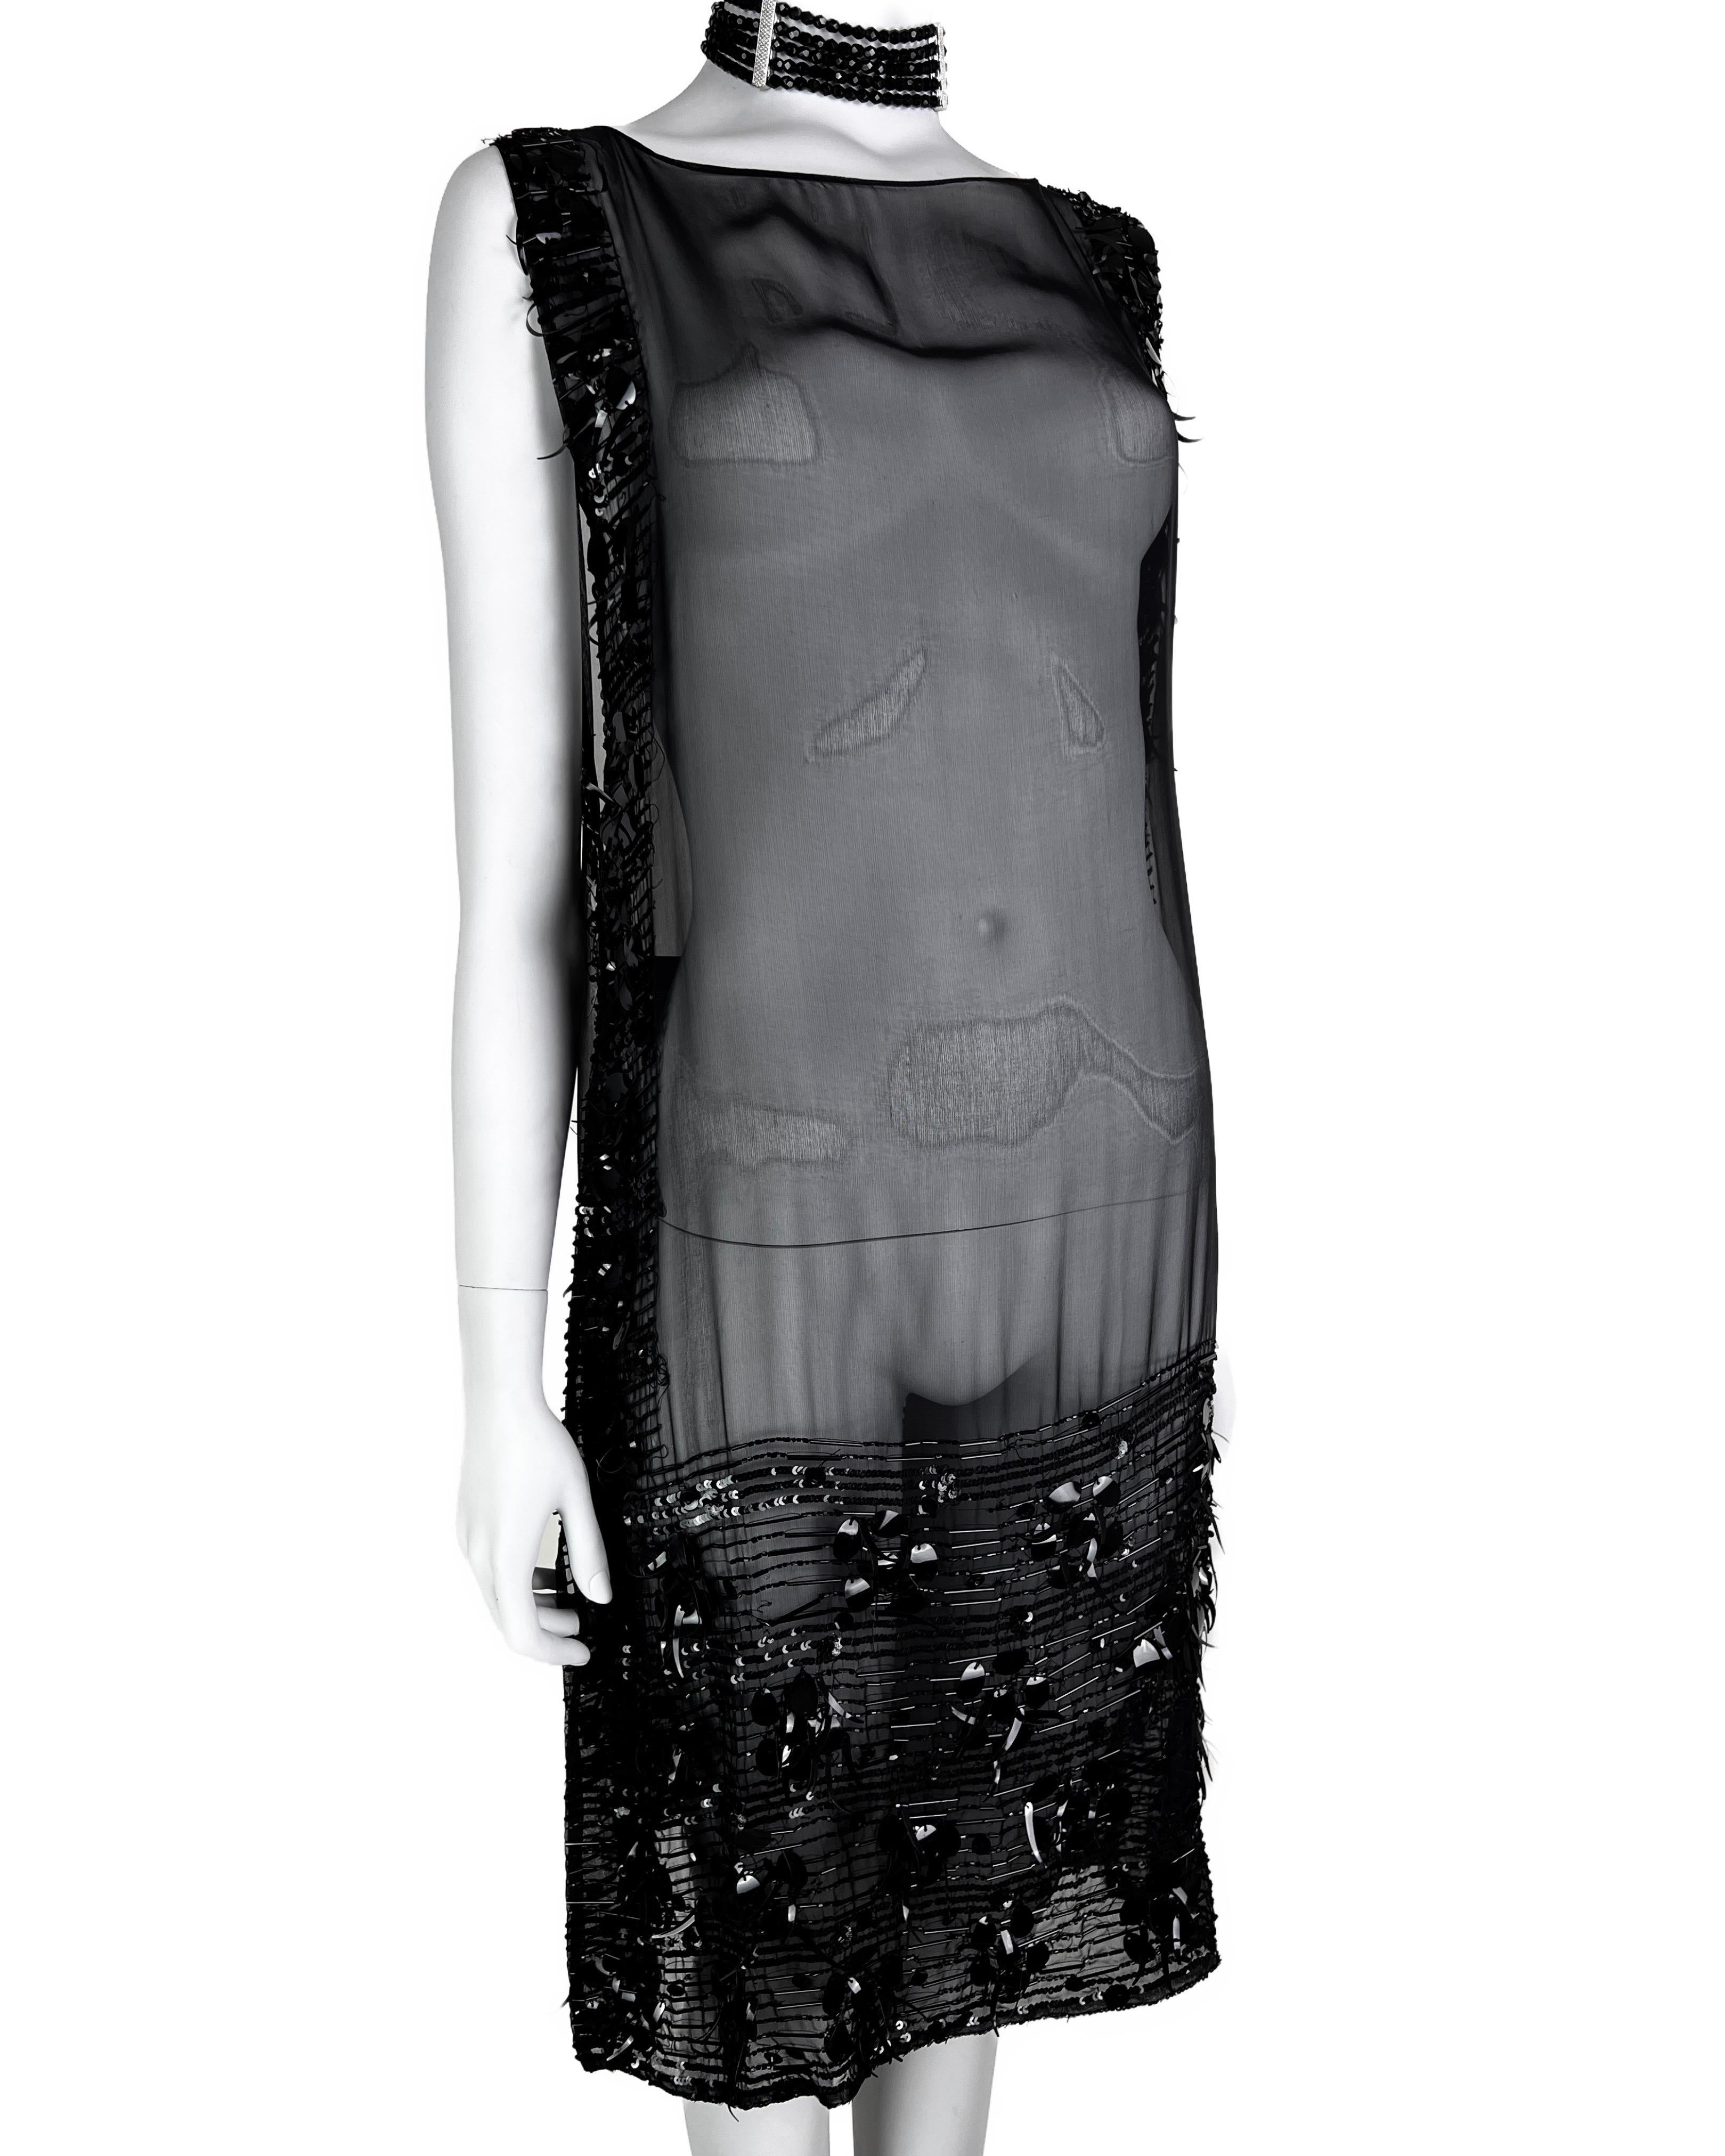 Women's Jean-Paul Gaultier Fall 2004 Embellished Black Silk Chiffon Tunic Dress For Sale